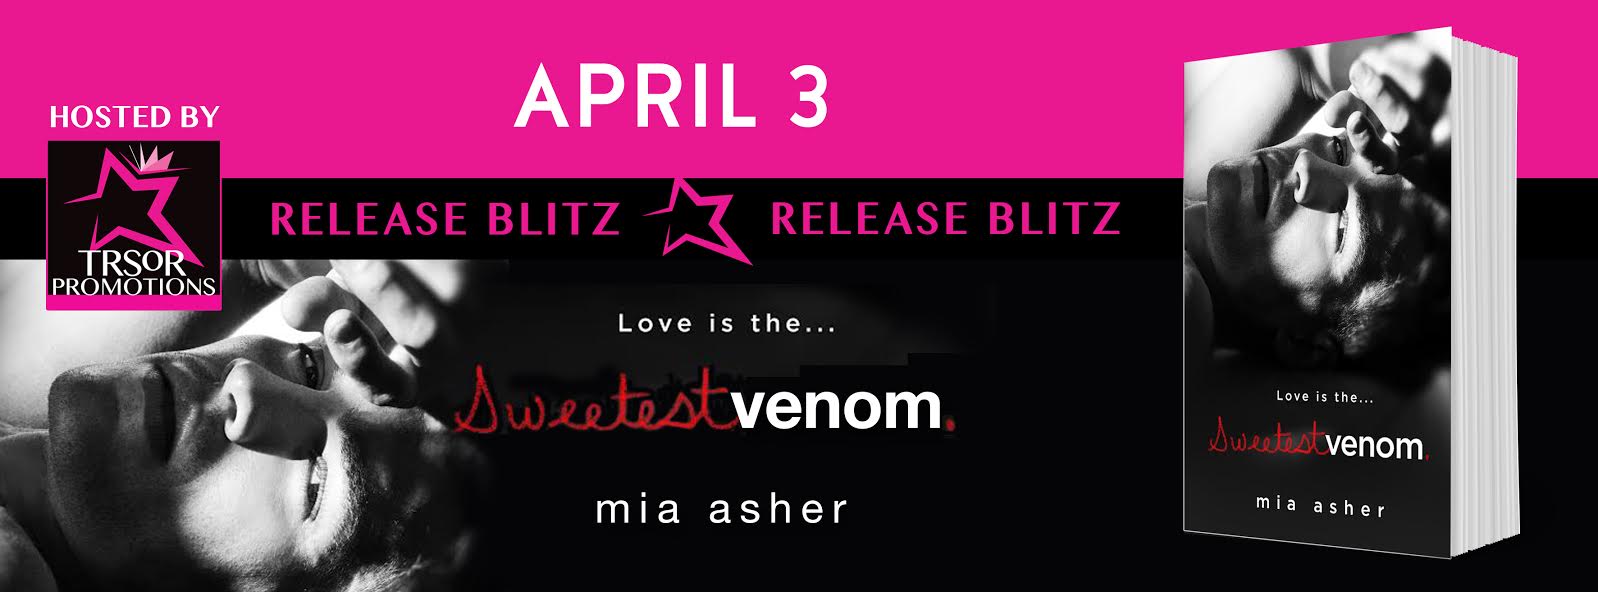 release blitz sweetest venom.jpg